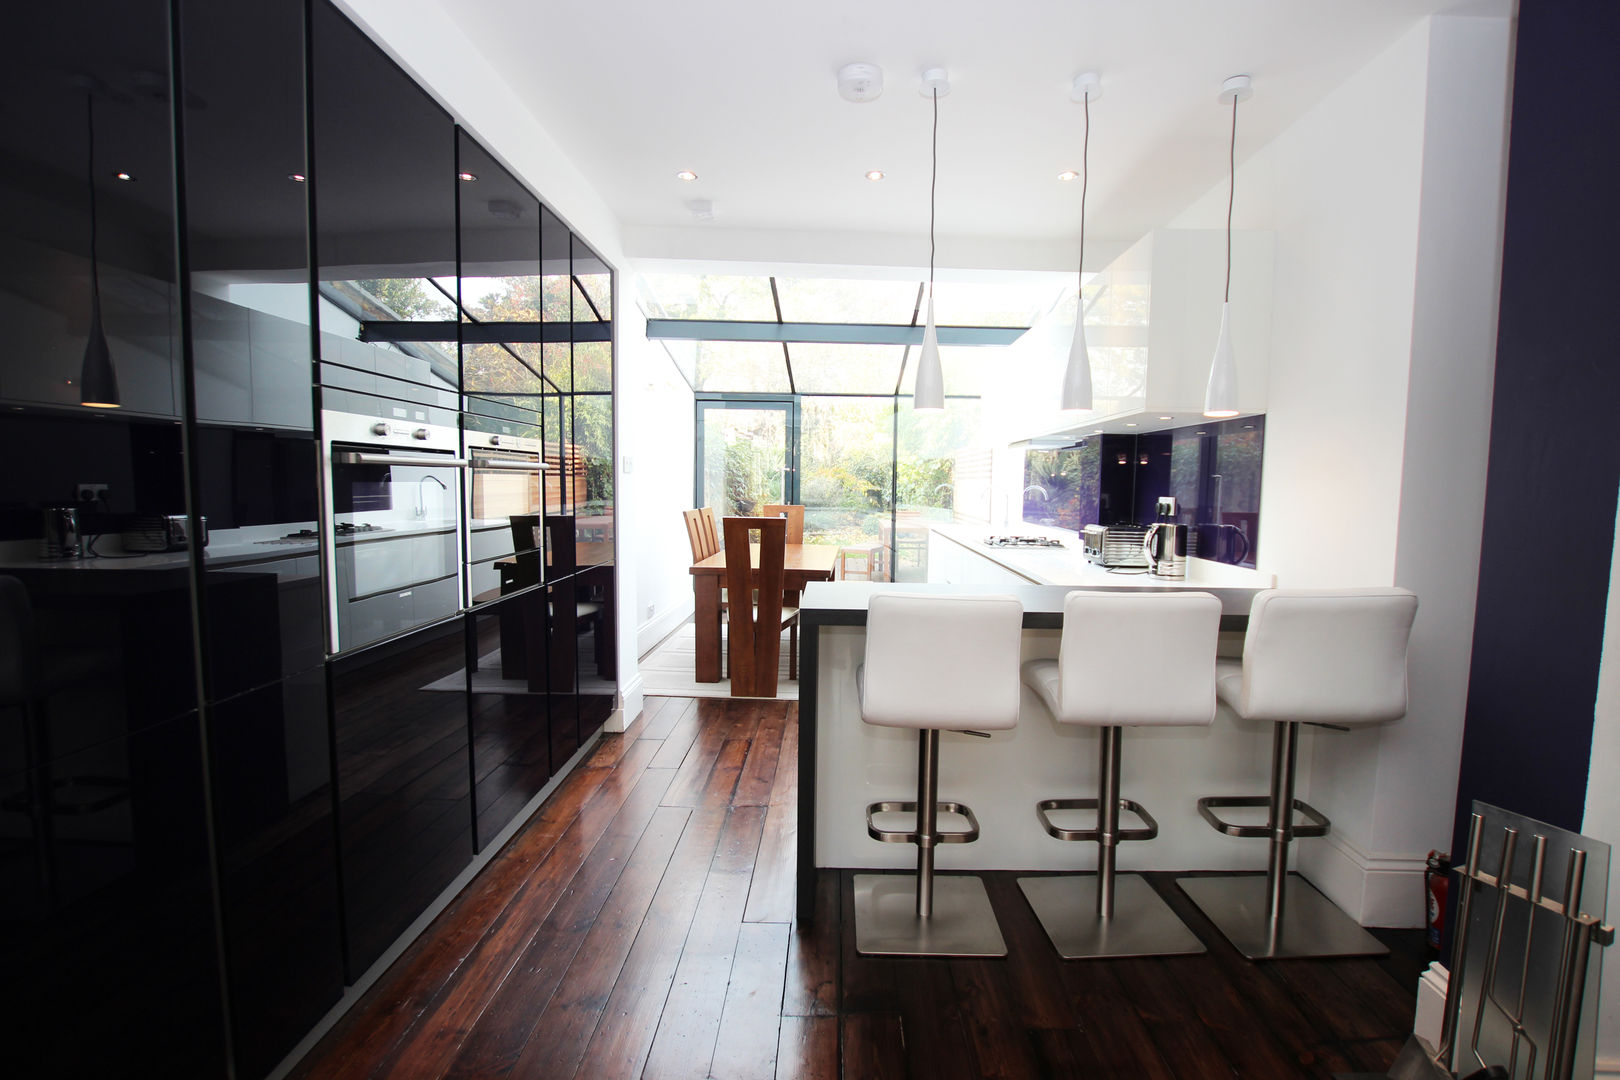 Purple gloss glass with white gloss lacquer kitchen units​ LWK London Kitchens Cocinas de estilo moderno